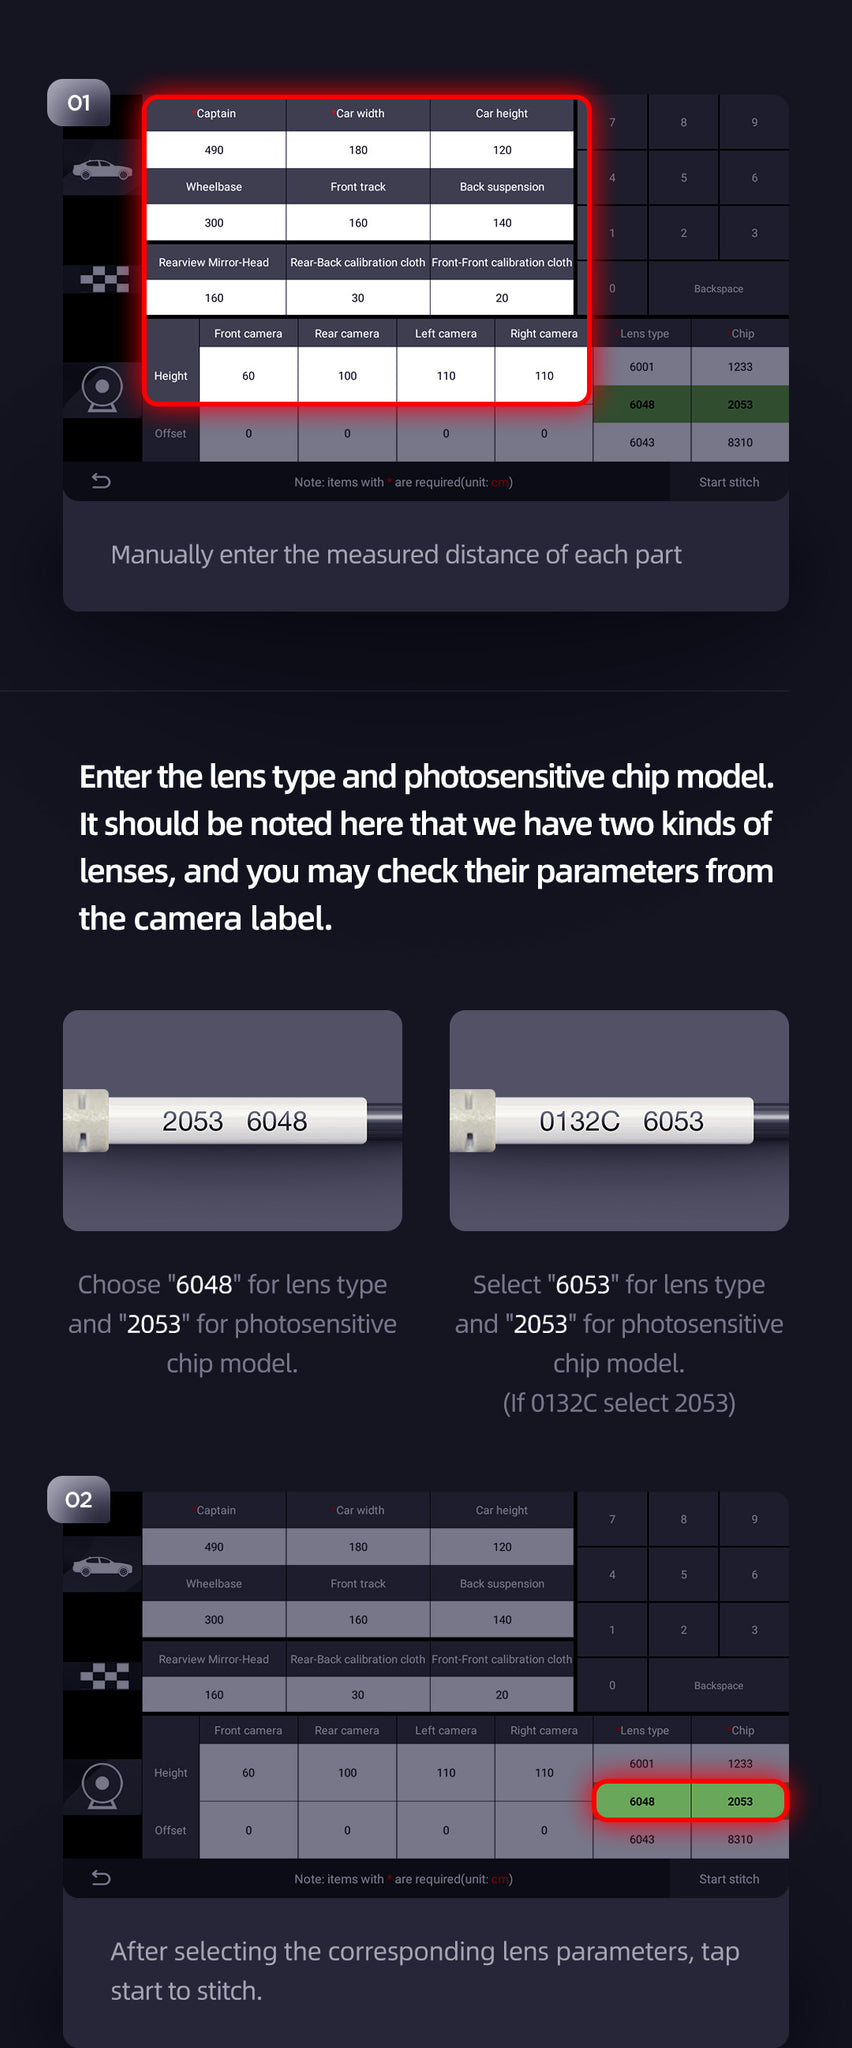 Enter lens type & photosensitive chip model